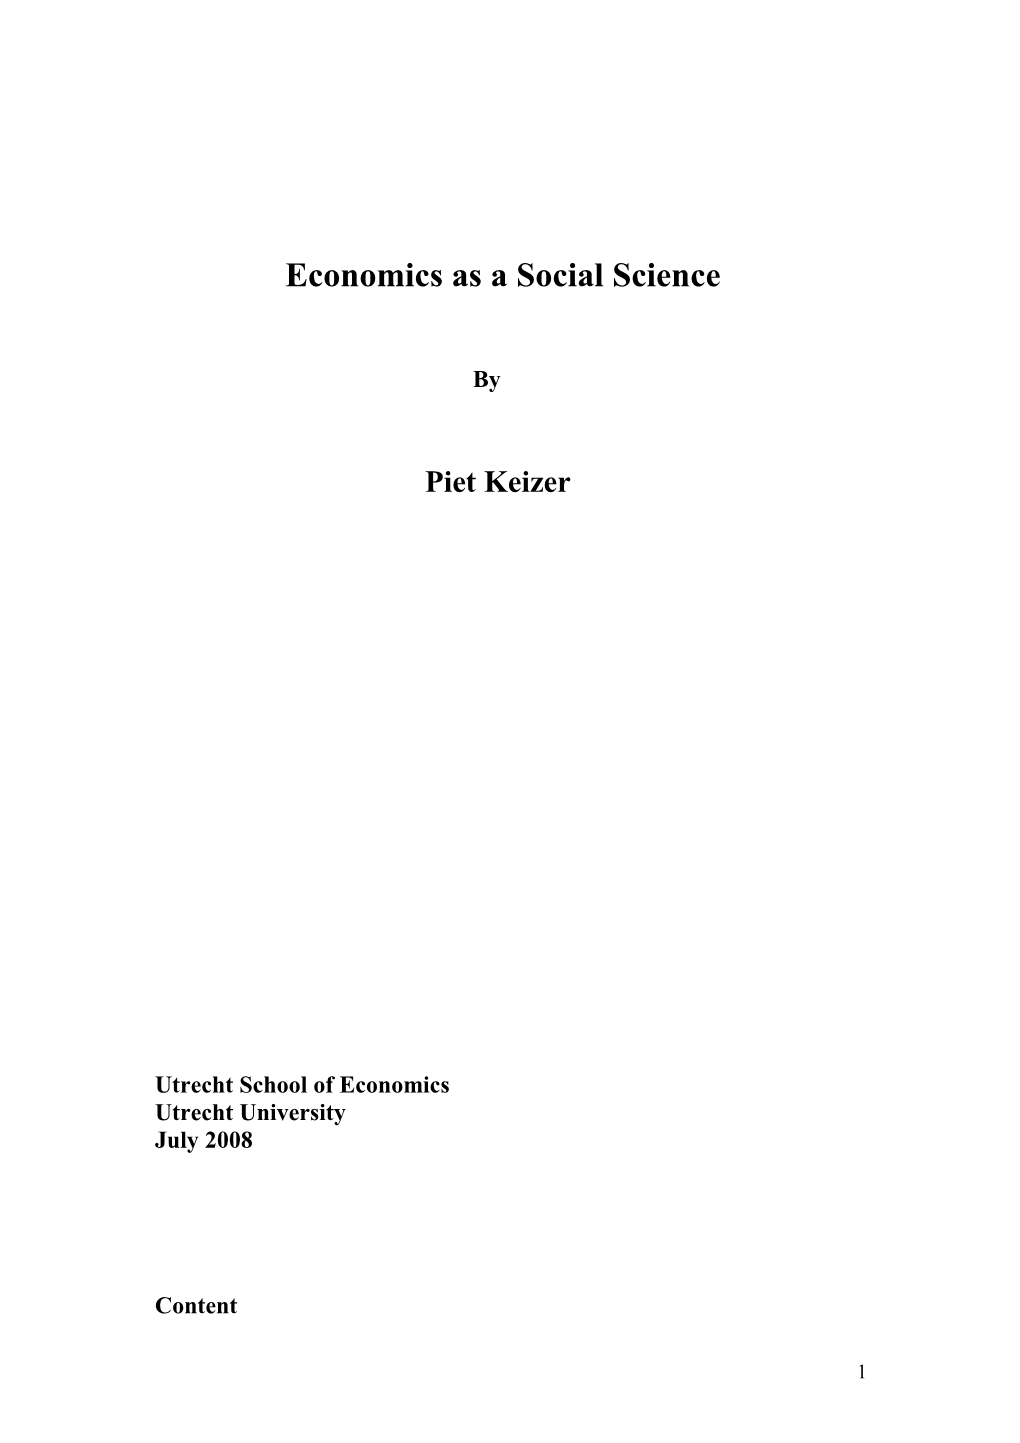 Economics As a Social Science